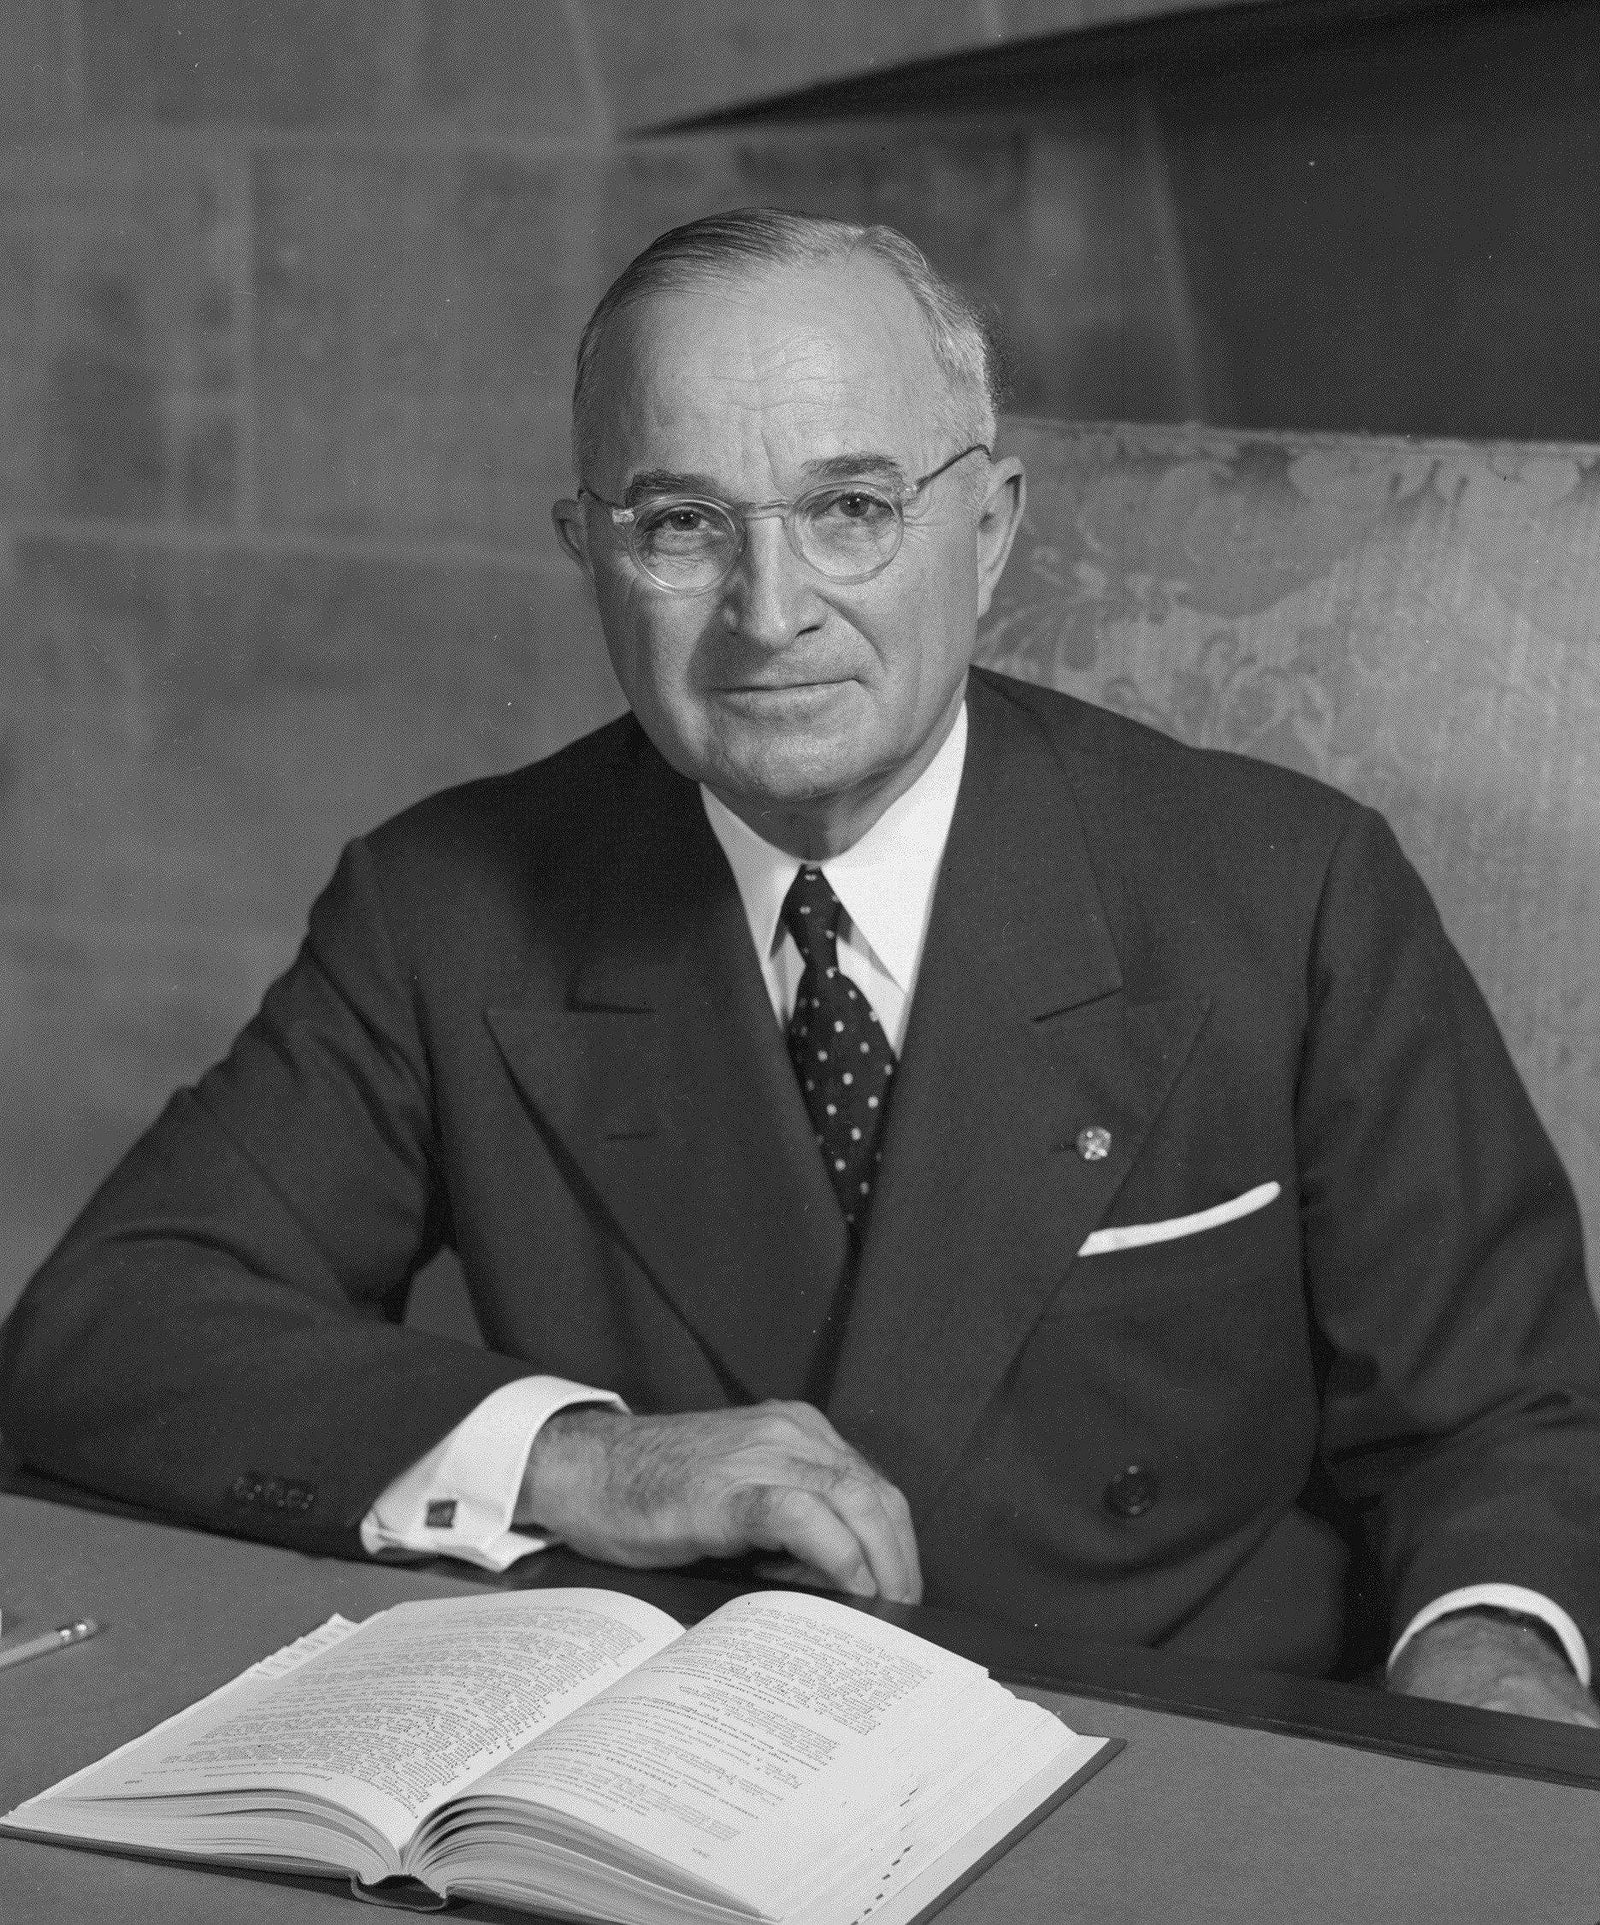 The 10 Best Photos of Birthday Boy Truman